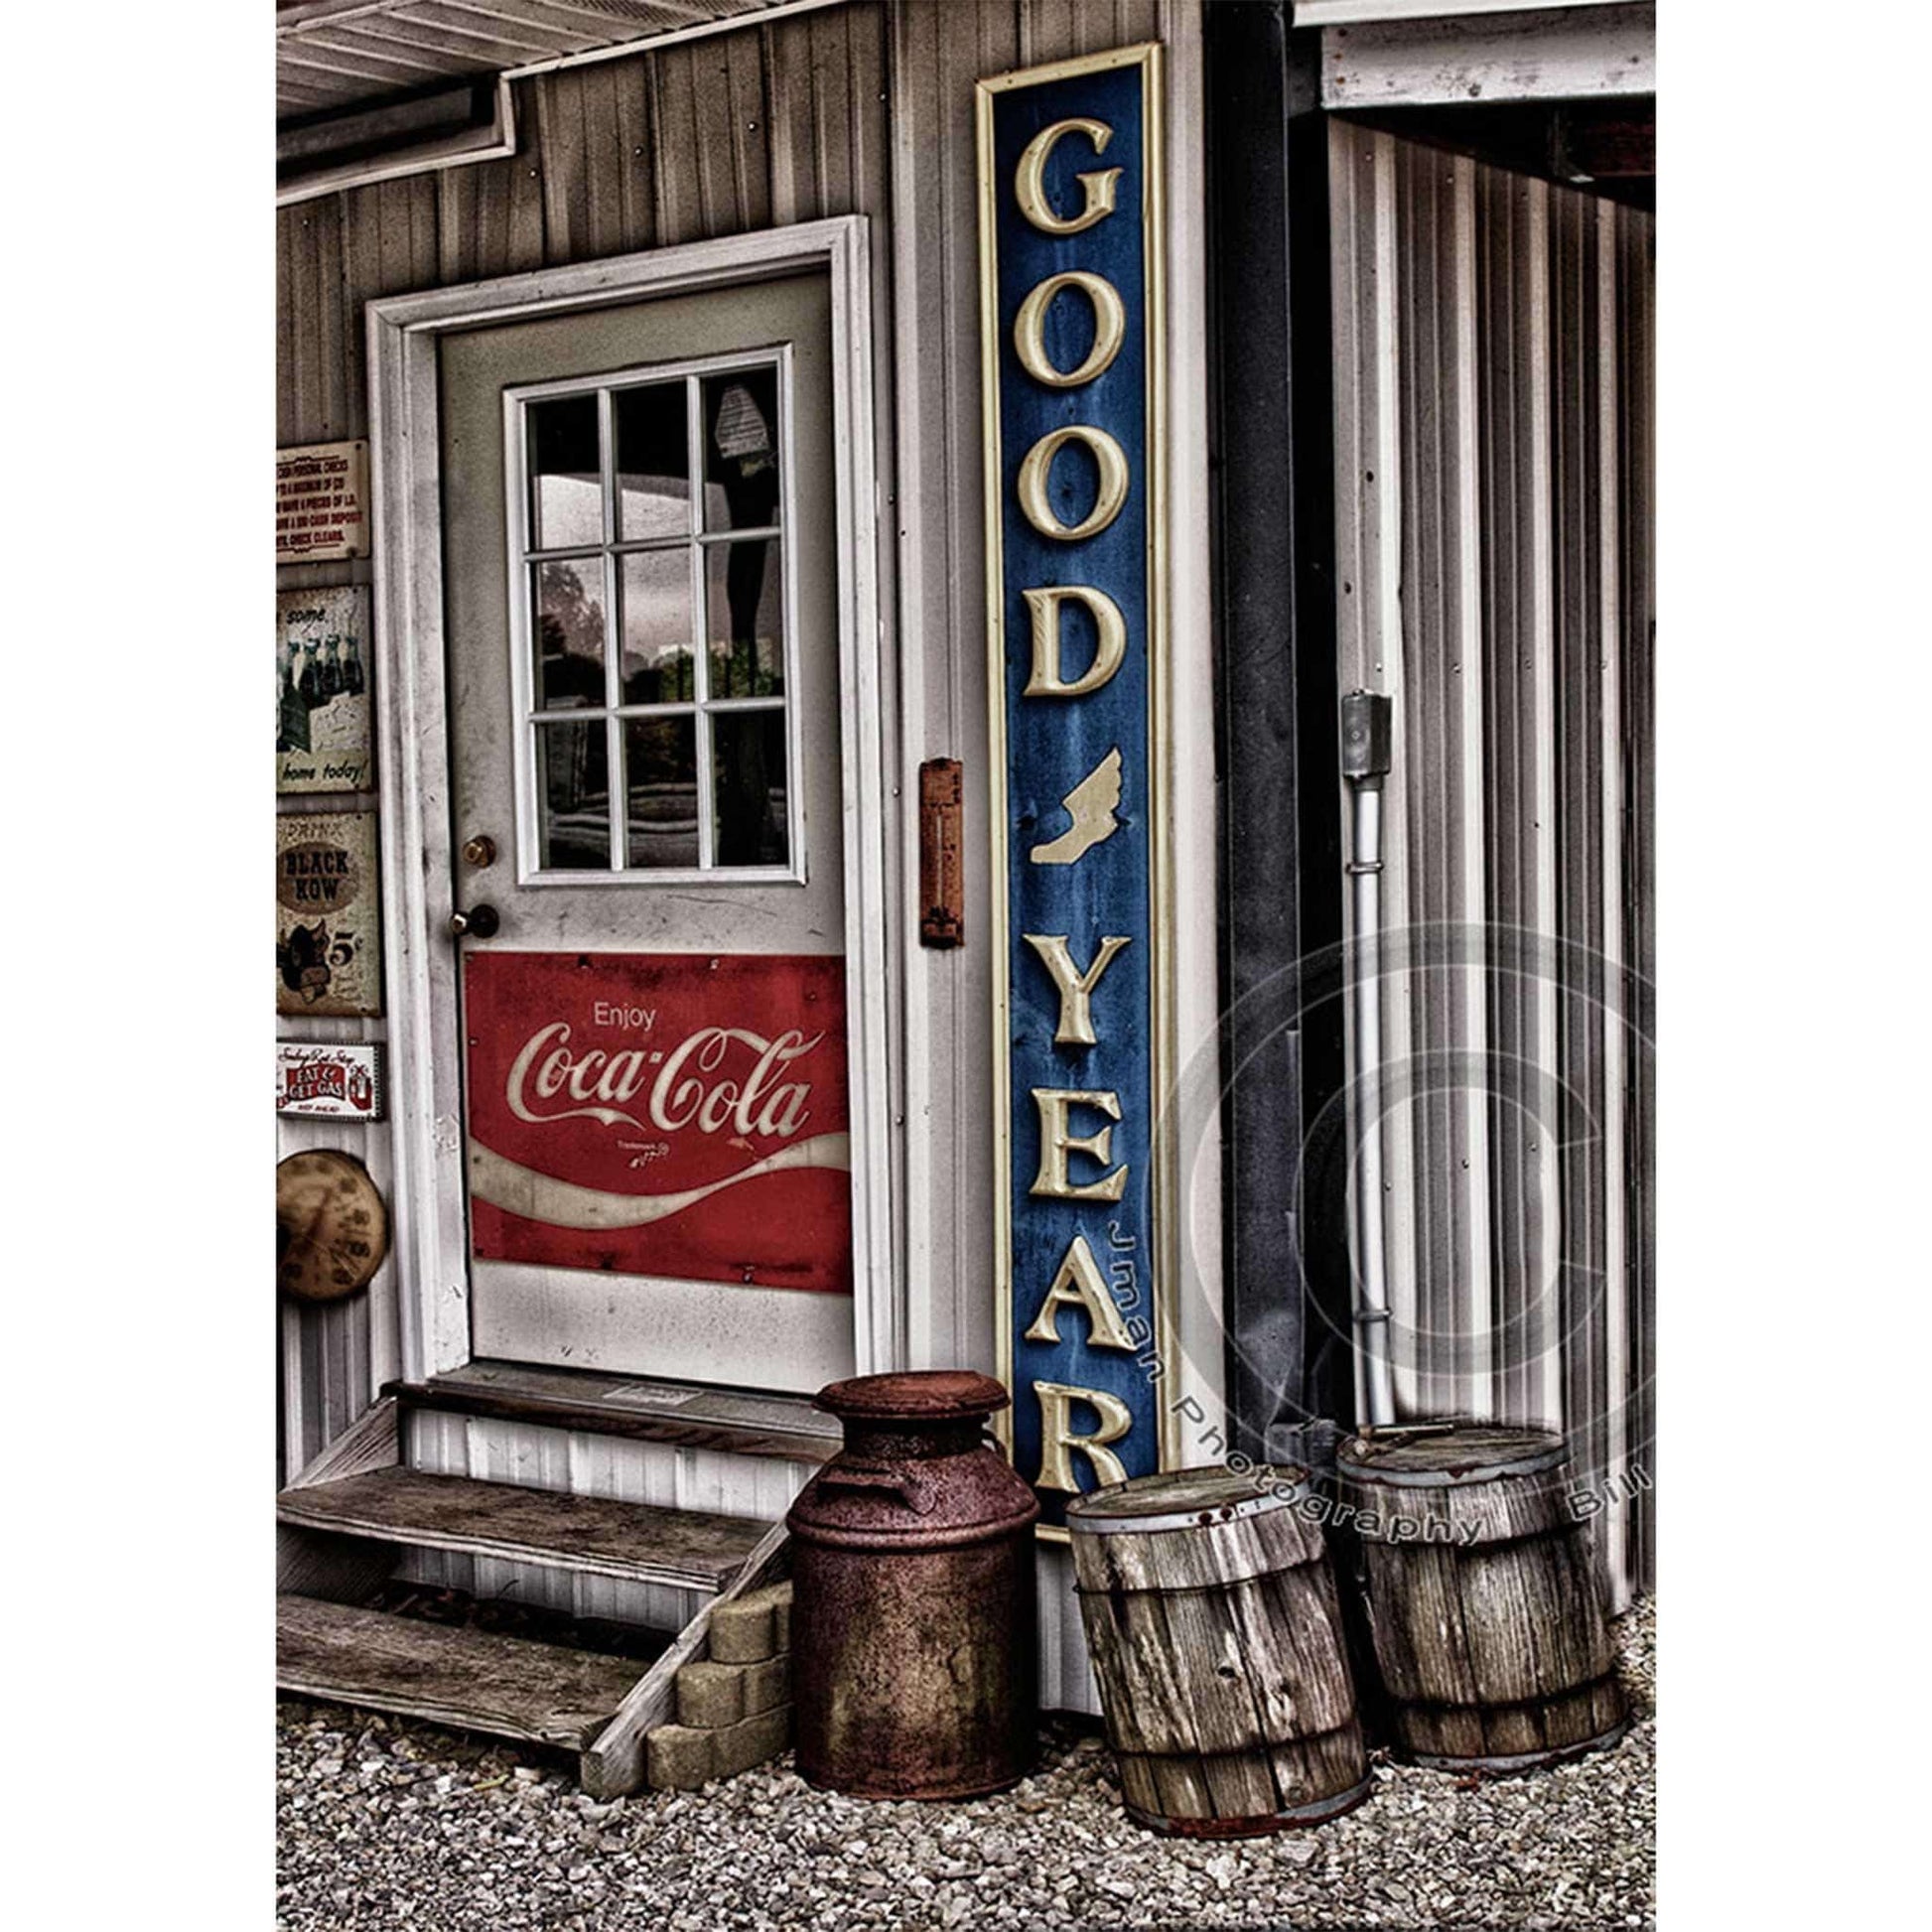 Goodyear & Signage - Back roads of Pennsylvania Automotive jmanphoto